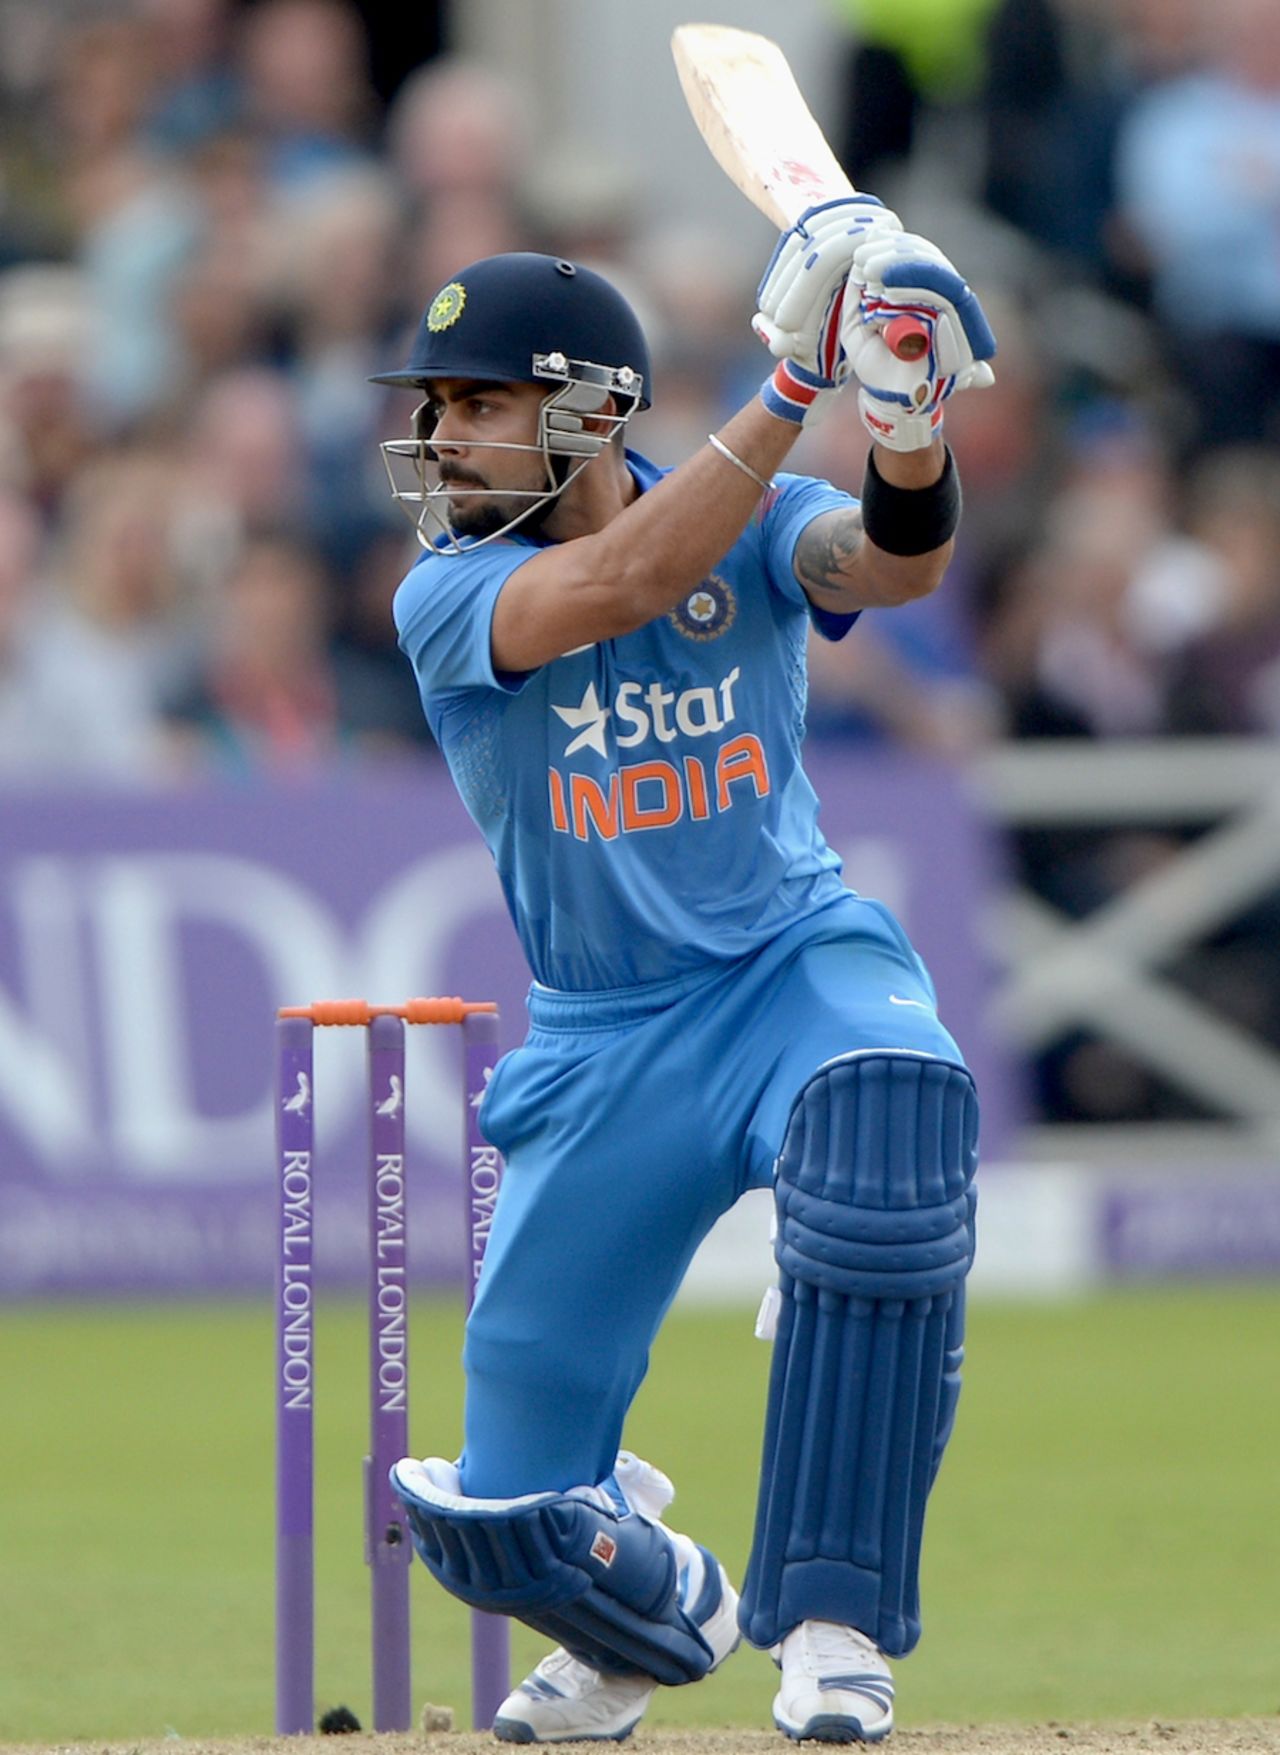 Virat Kohli ground his way to 40 runs, England v India, 3rd ODI, Trent Bridge, August 30, 2014